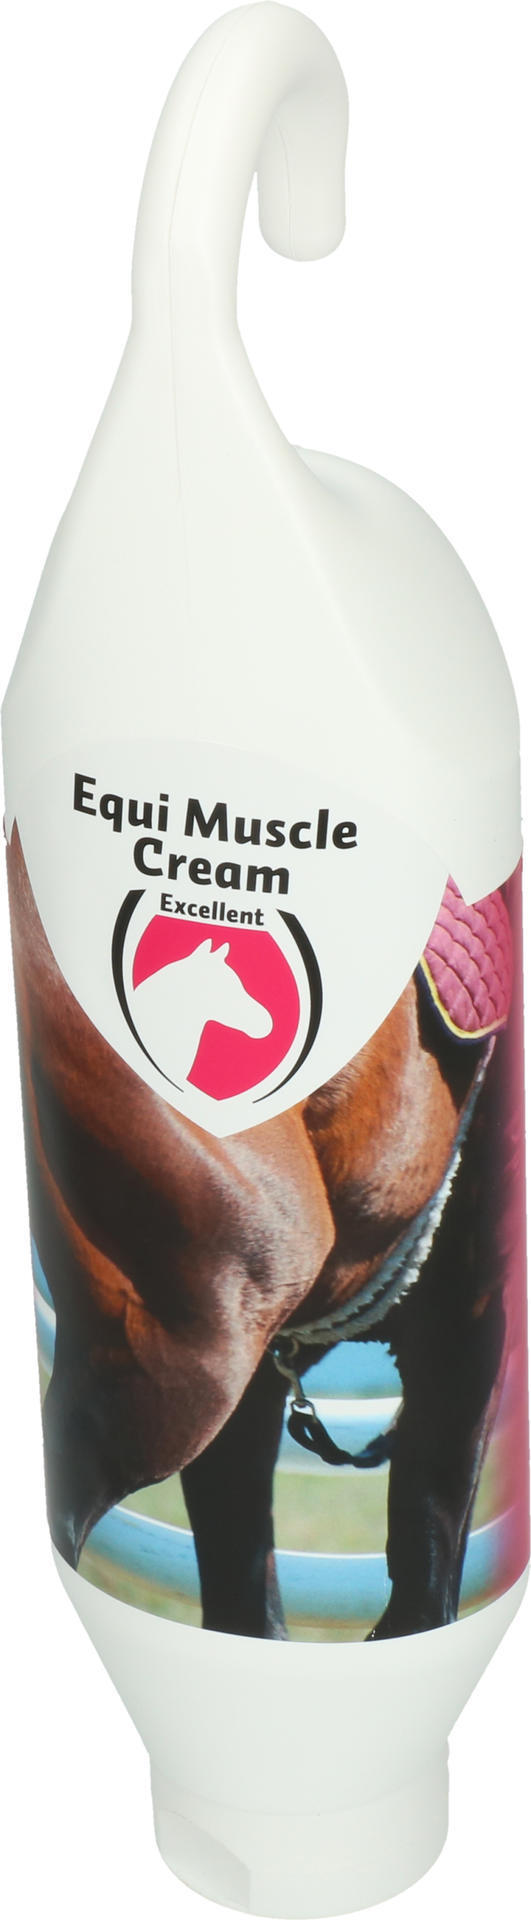 Equi muscle cream, Horse health